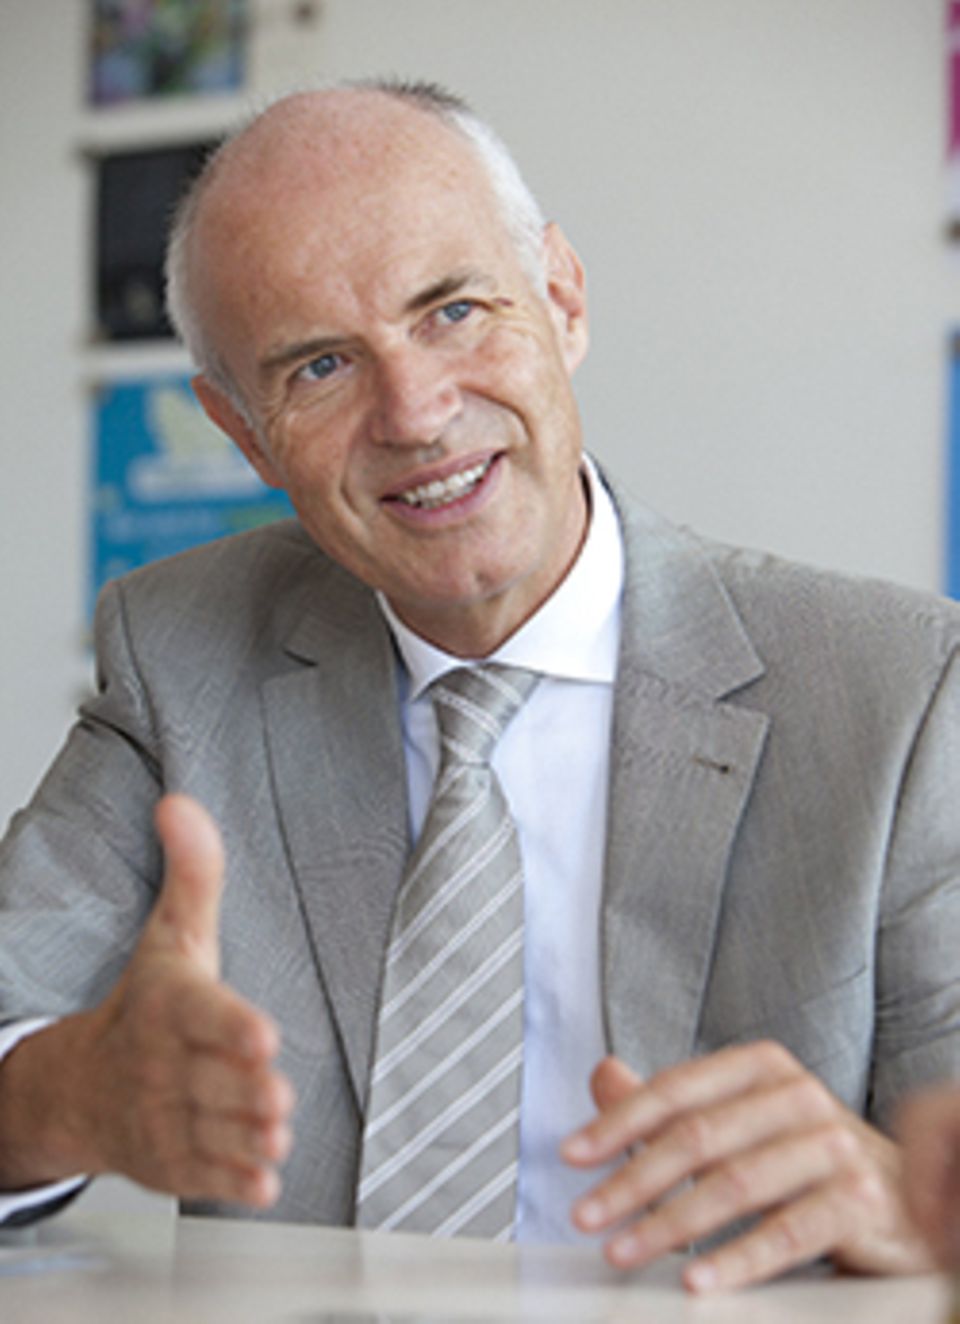 Alnatura-Gründer Götz Rehn